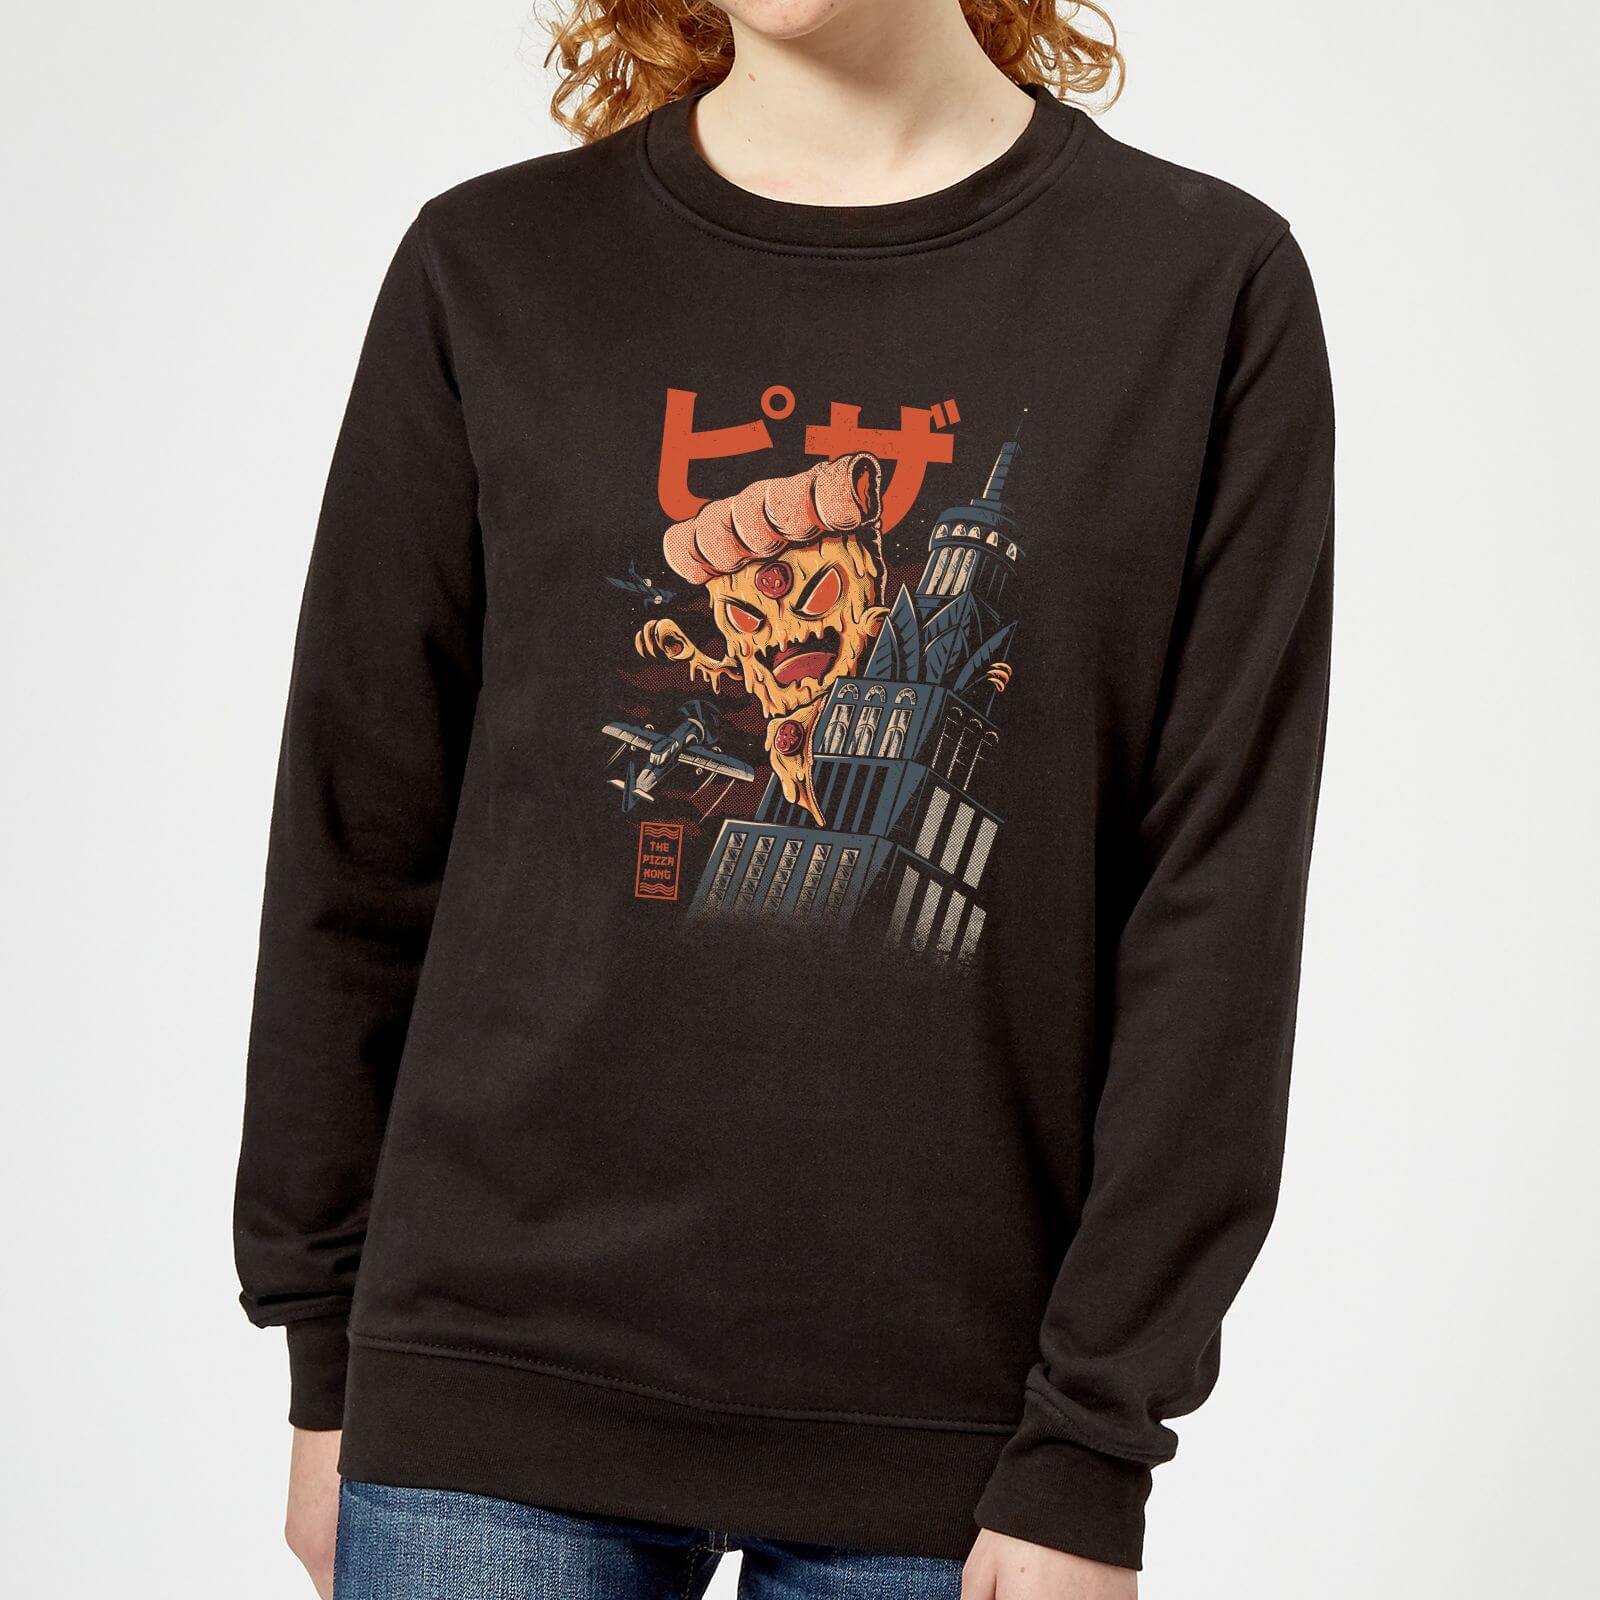 Ilustrata Pizza Kong Women's Sweatshirt - Black - XS - Black